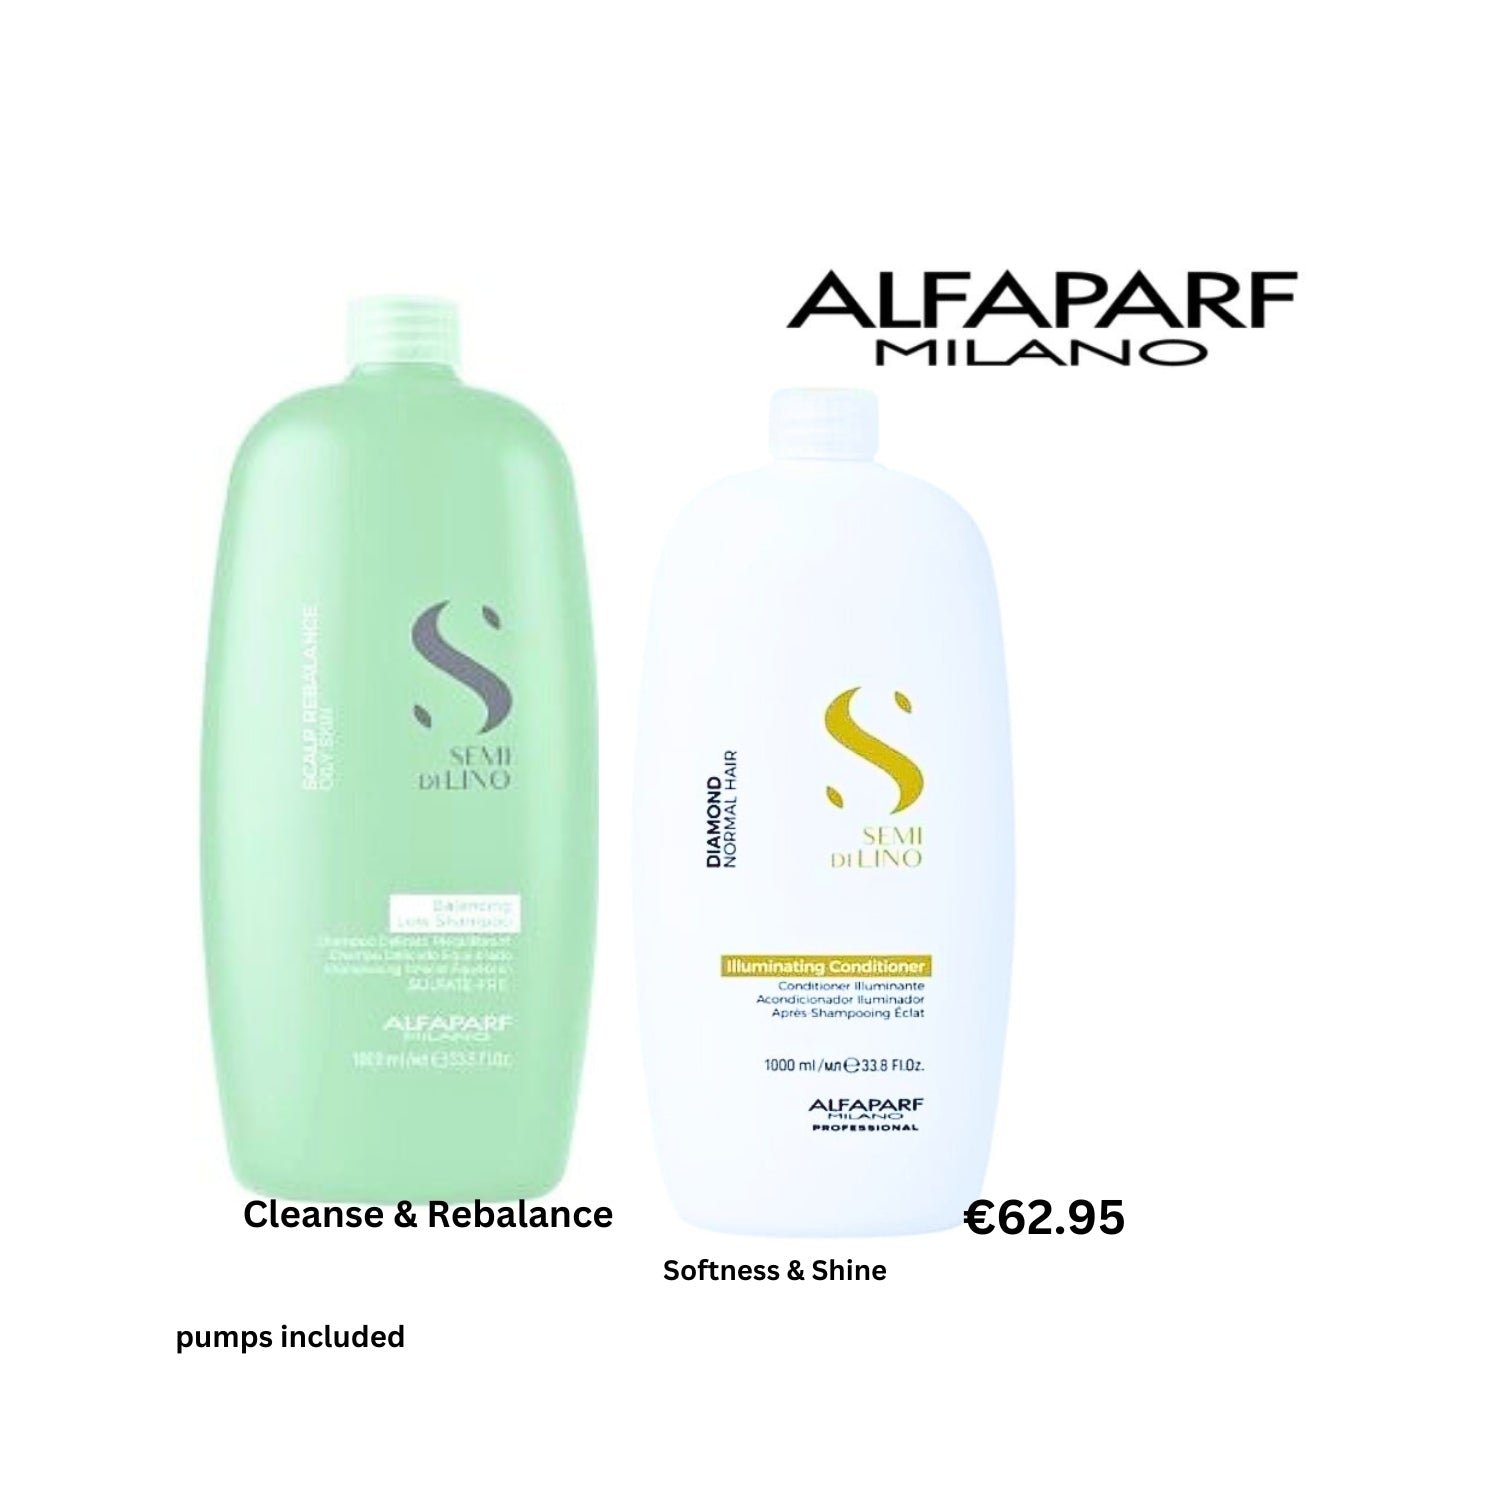 ALFAPARF Rebalance Oily Shampoo & Diamond Conditioner 1000ml at mylook.ie